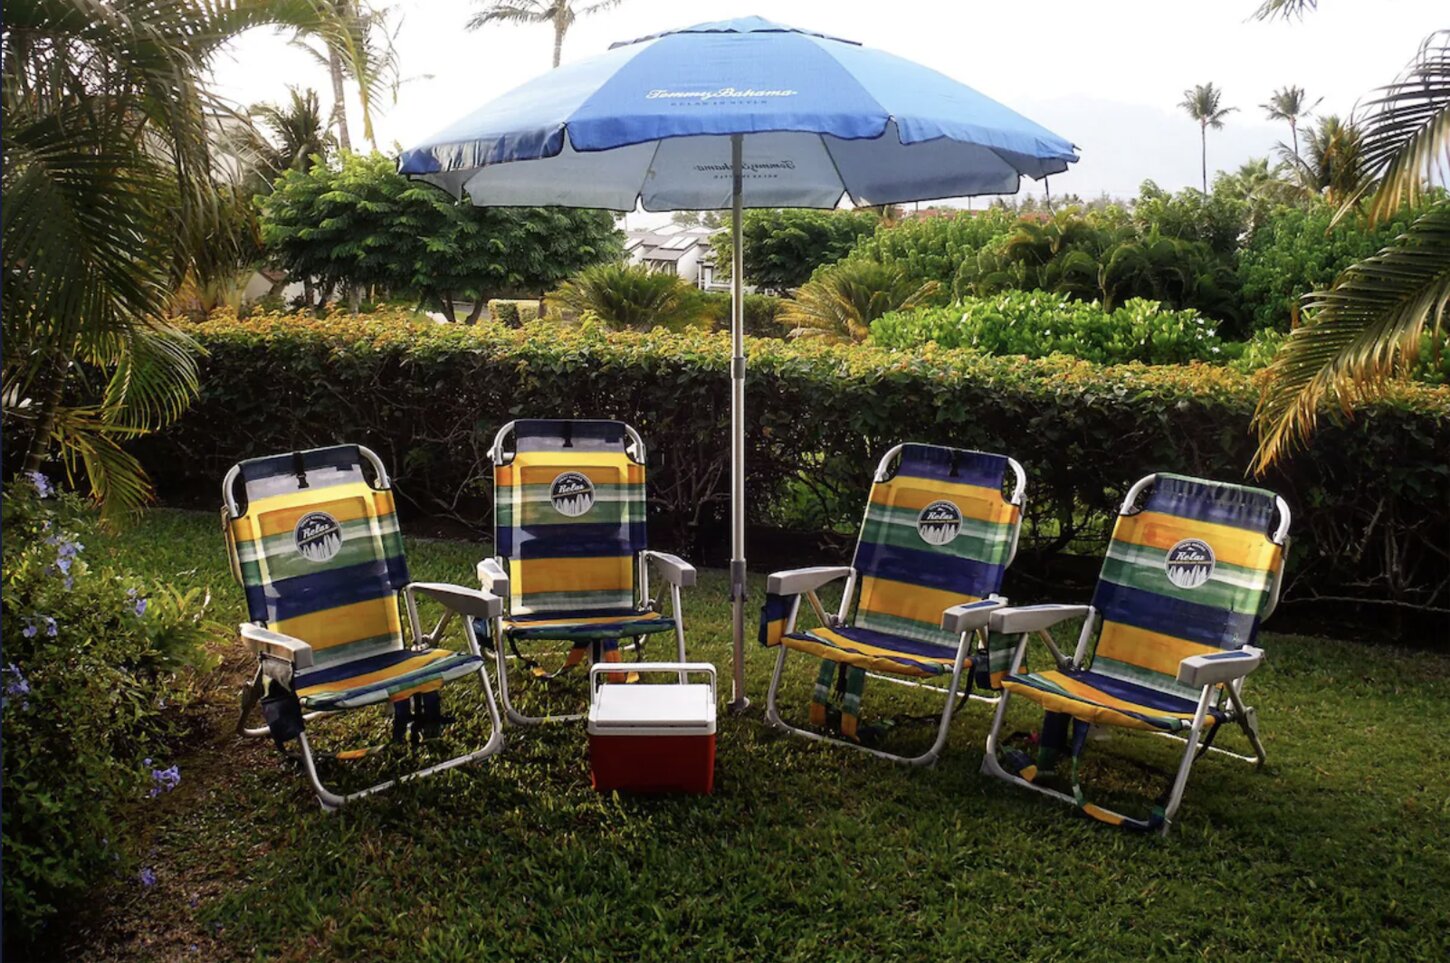 Beach Chairs, Cooler & Umbrella Provided